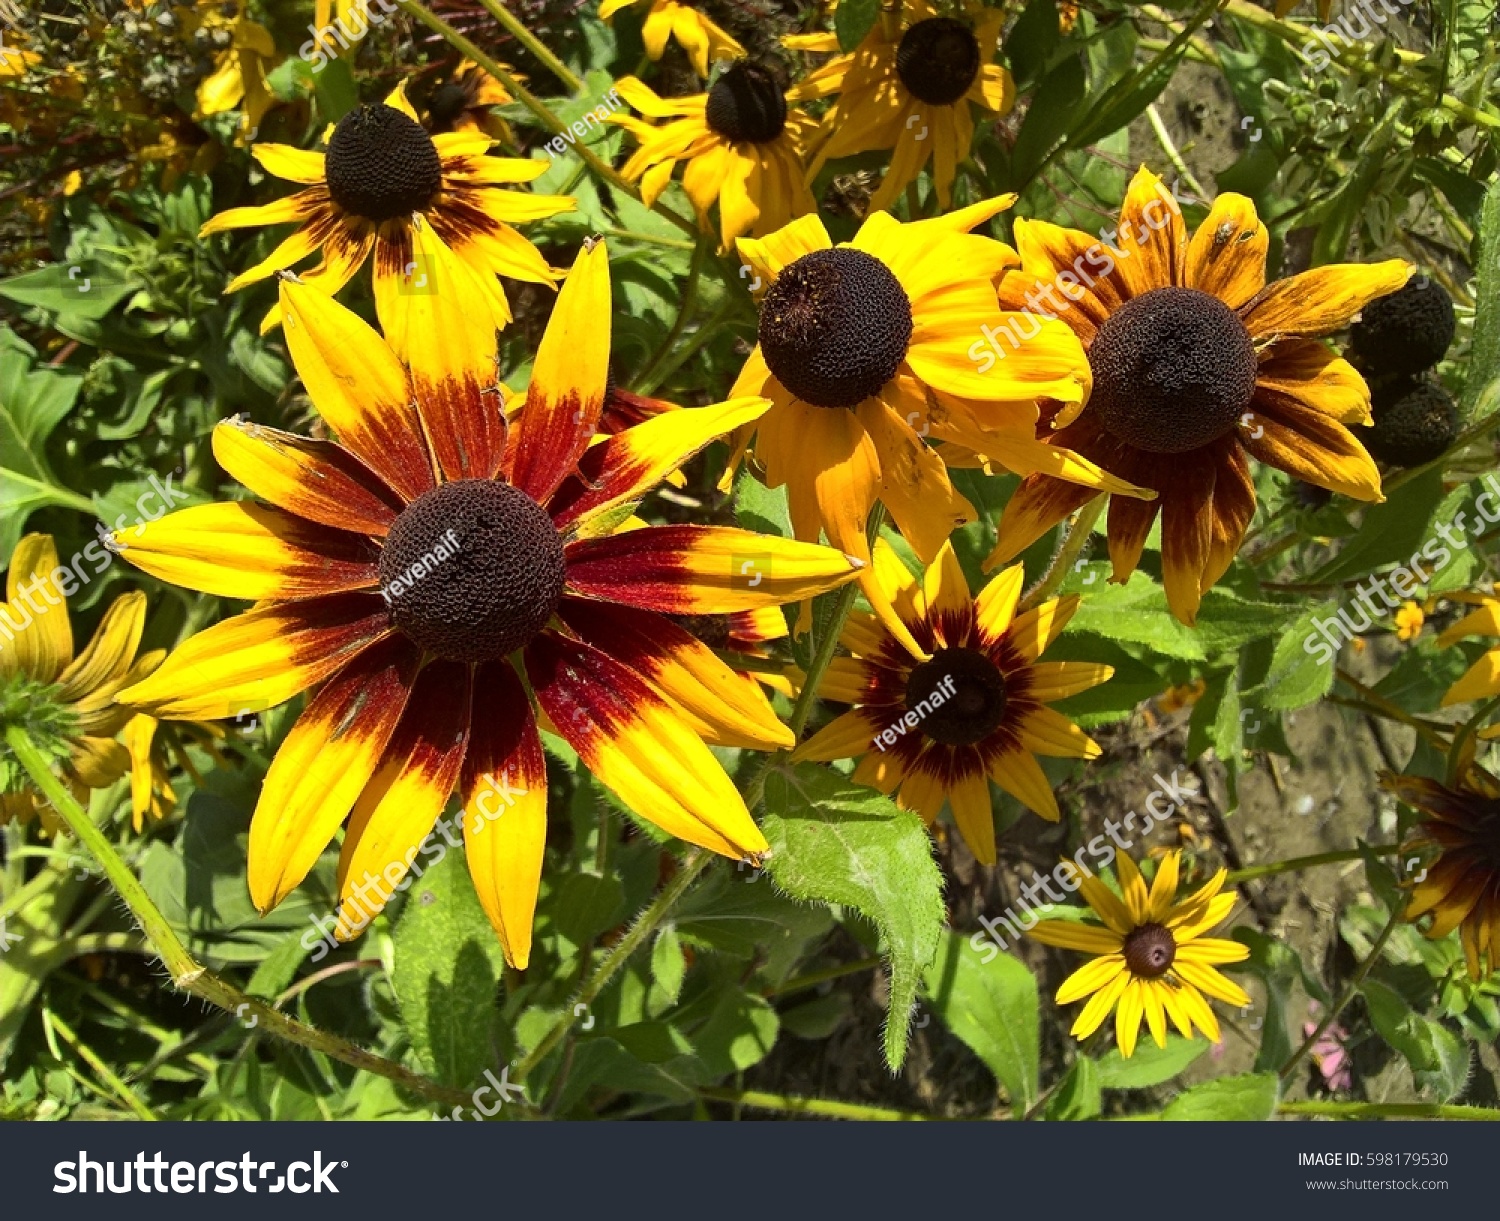 Helianthus Ornamental Garden. Brown Orange Yellow flowers in shine of the sun. Garden in the background. #598179530